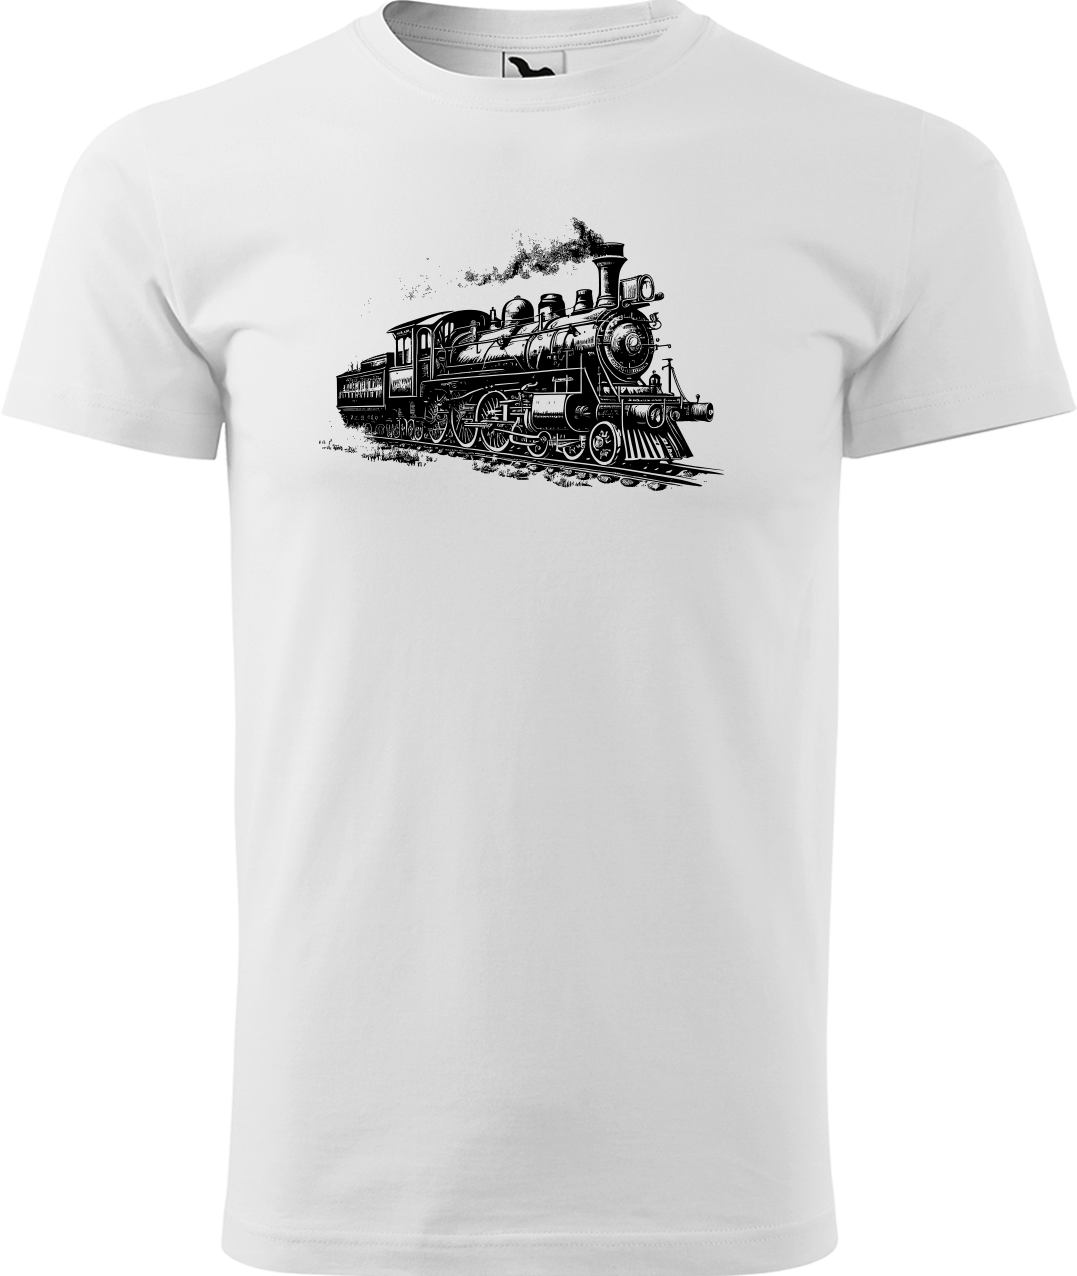 Tričko s vlakem - Stará lokomotiva Velikost: XL, Barva: Bílá (00)